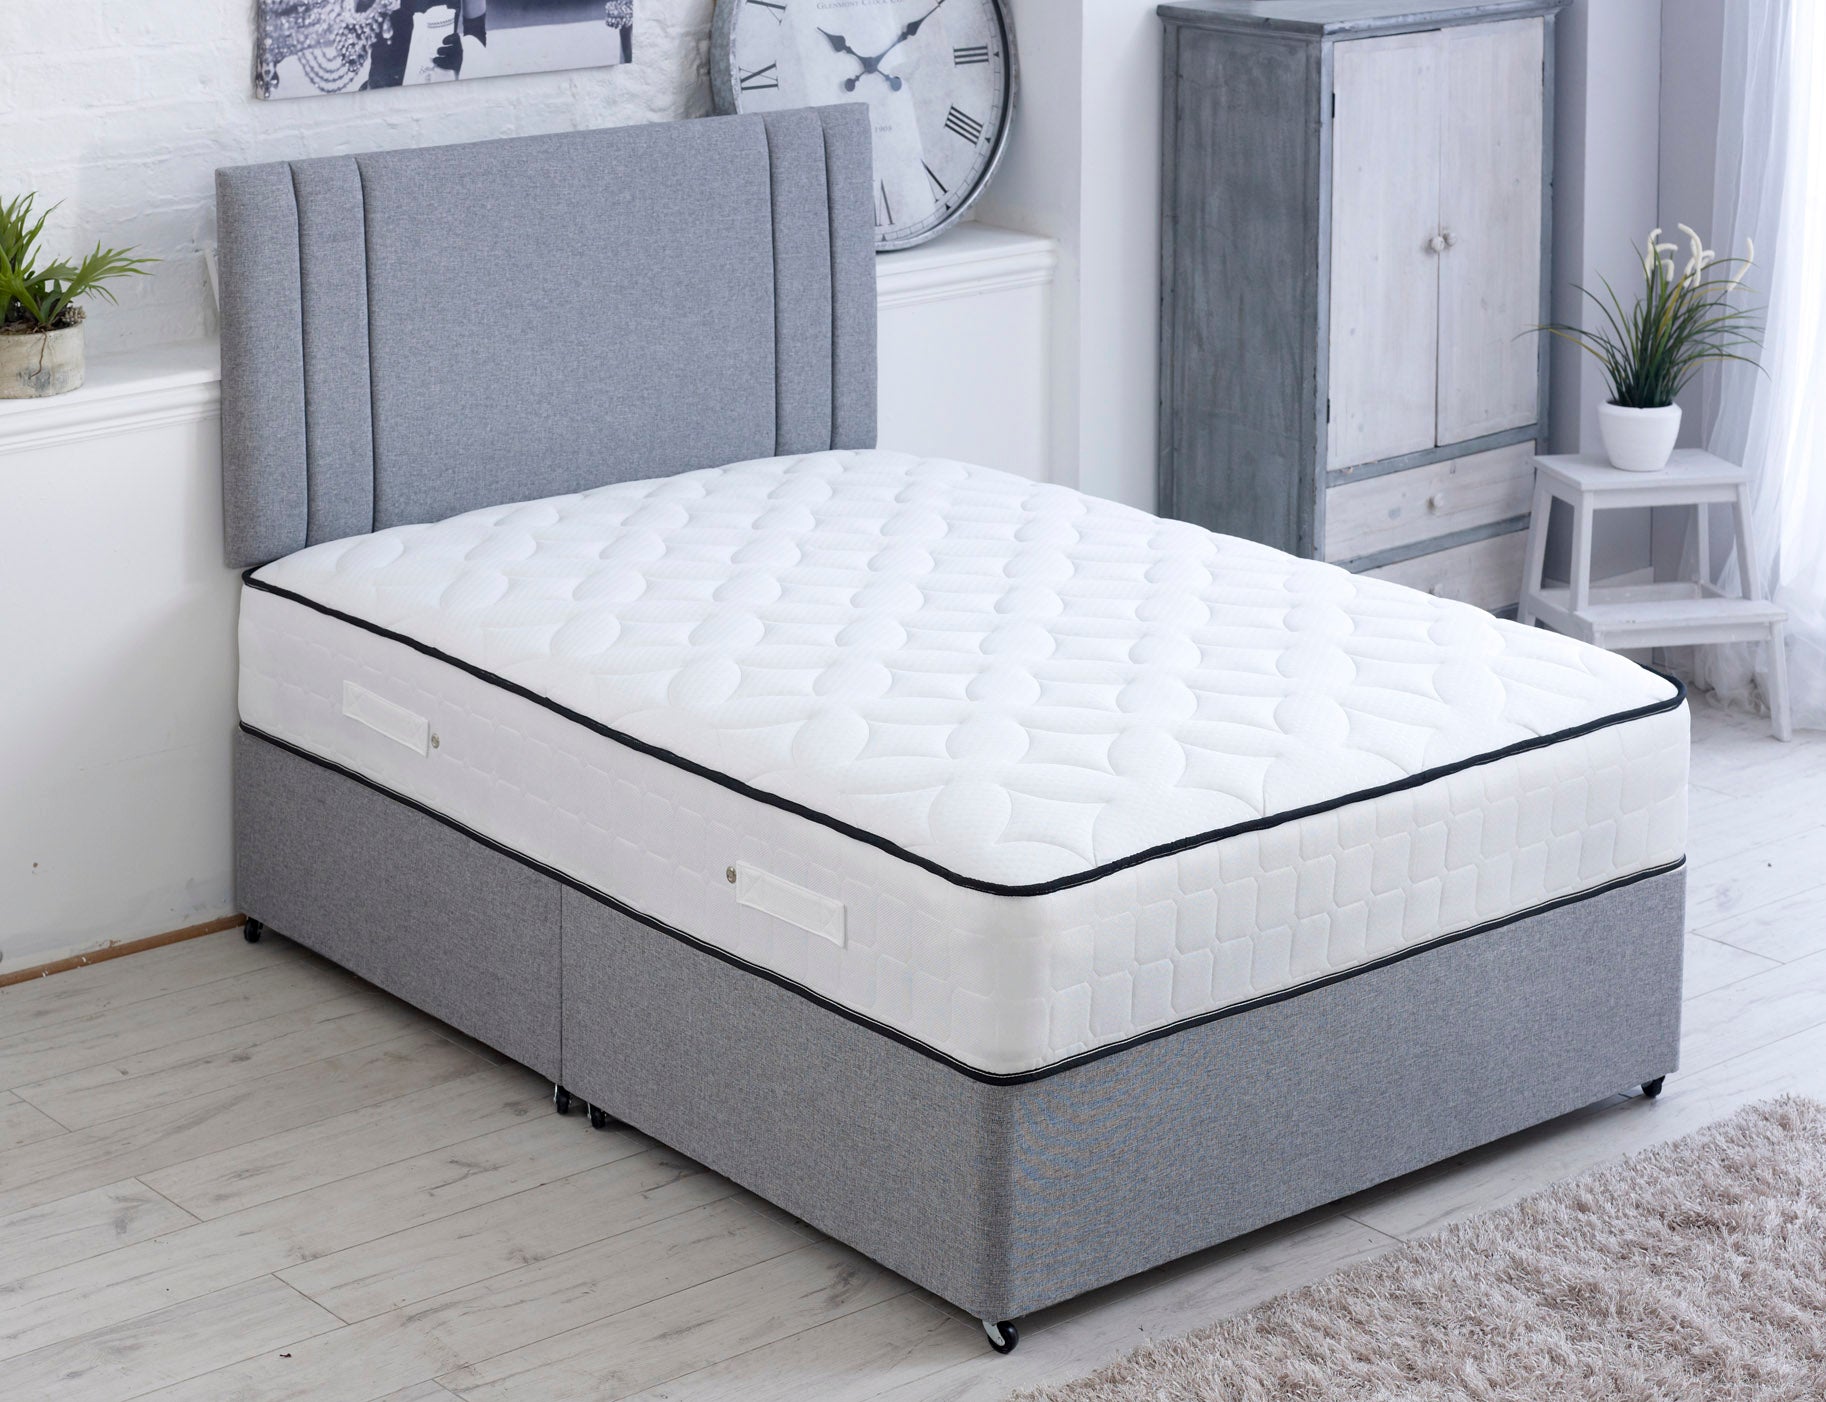 Serene Divan Bed Set With Pocket Sprung Mattress And Headboard